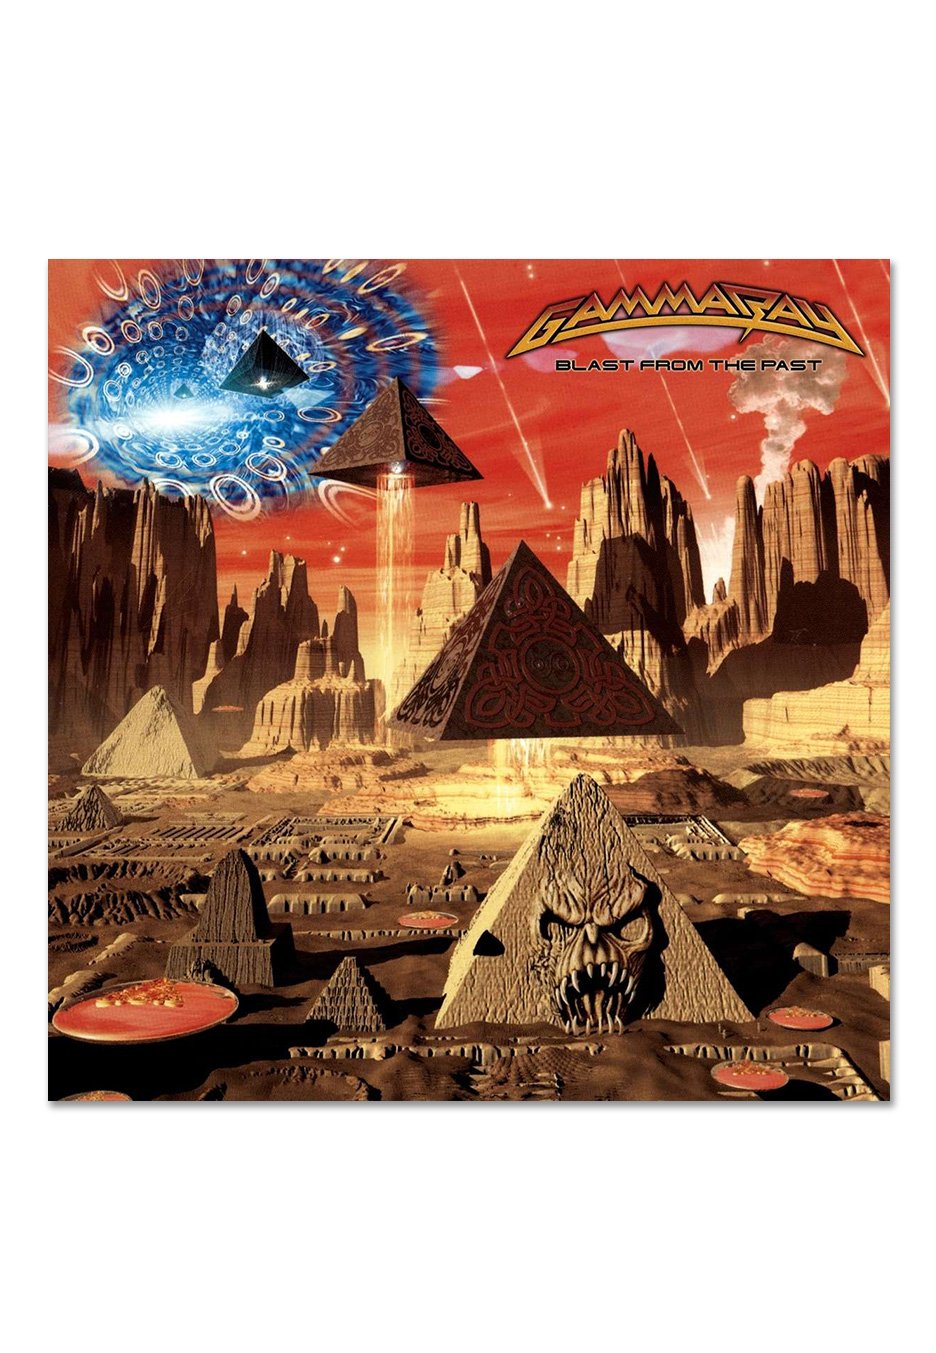 Gamma Ray - Blast From The Past - Vinyl